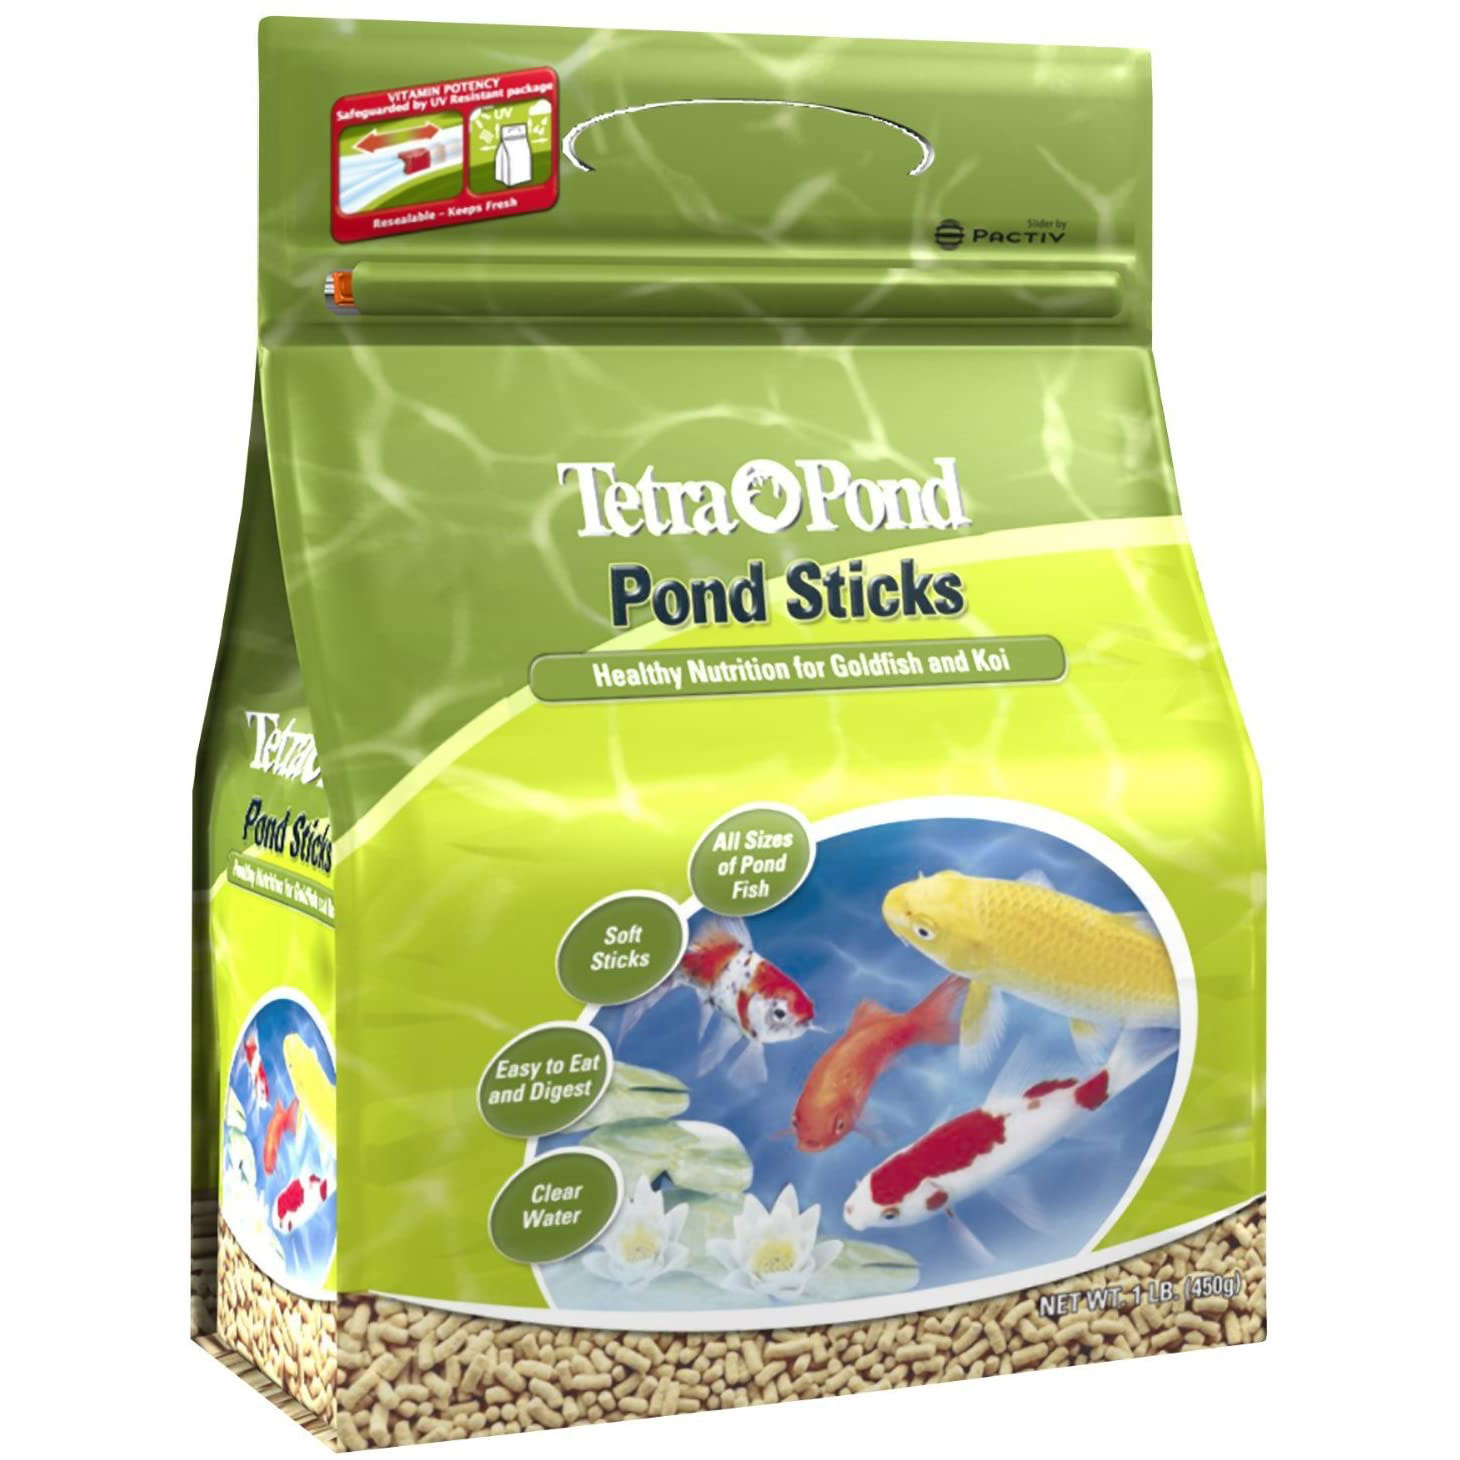 Tetra Pond Healthy Premium Nutrition Pond Sticks